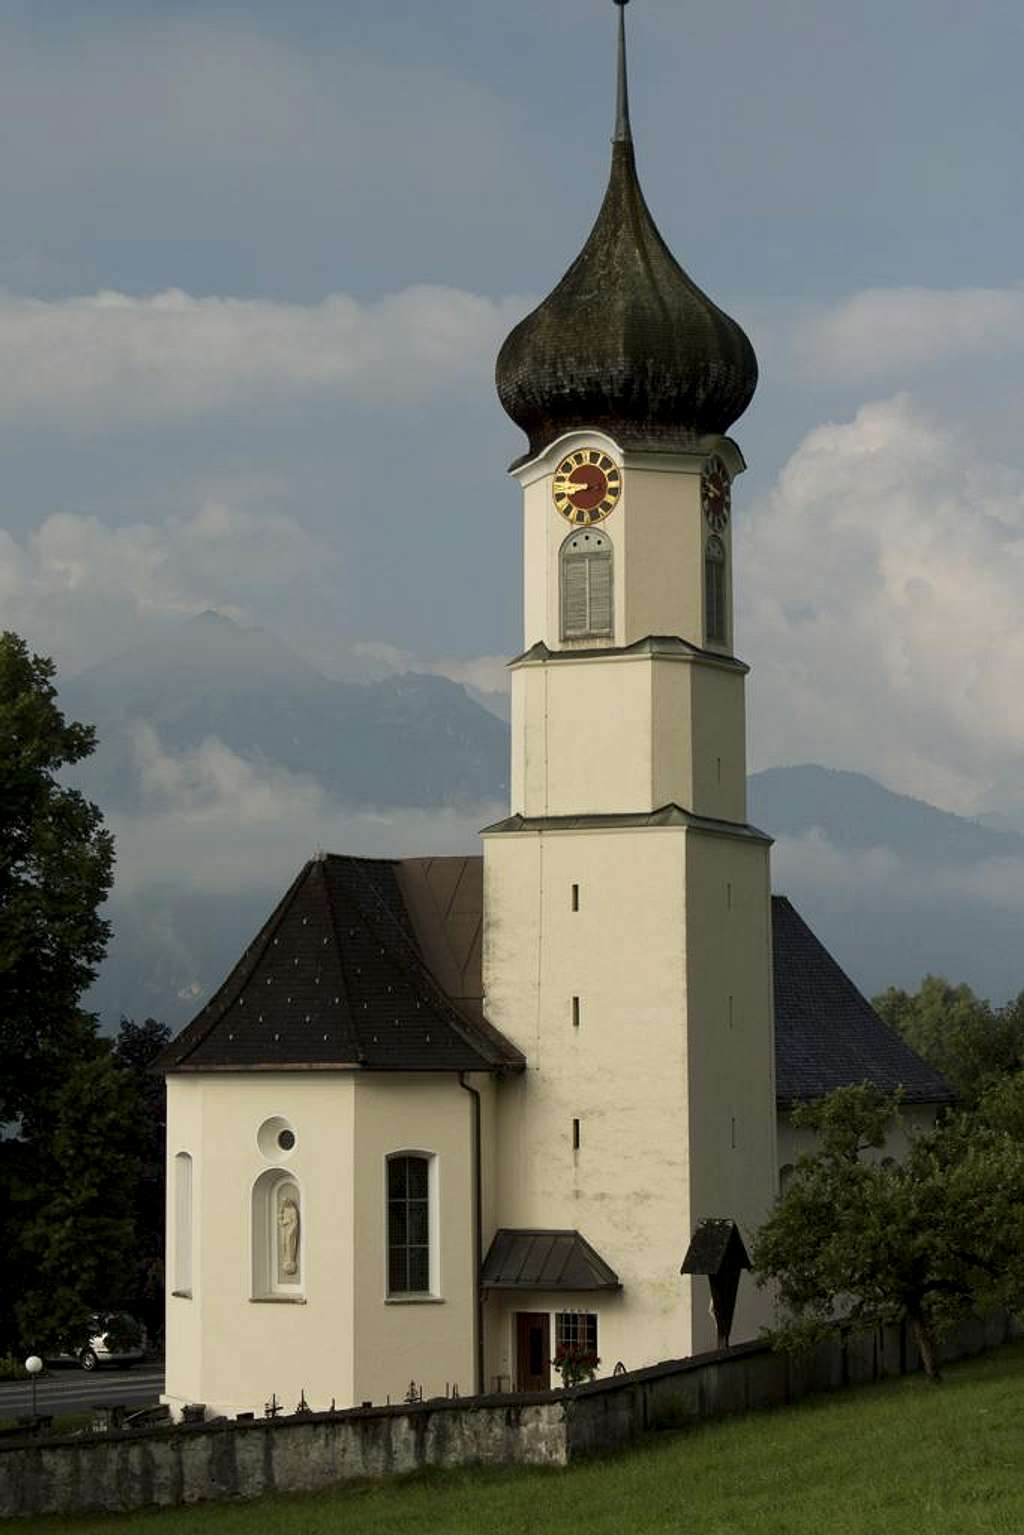 At the trailhead: the church of Thüringerberg